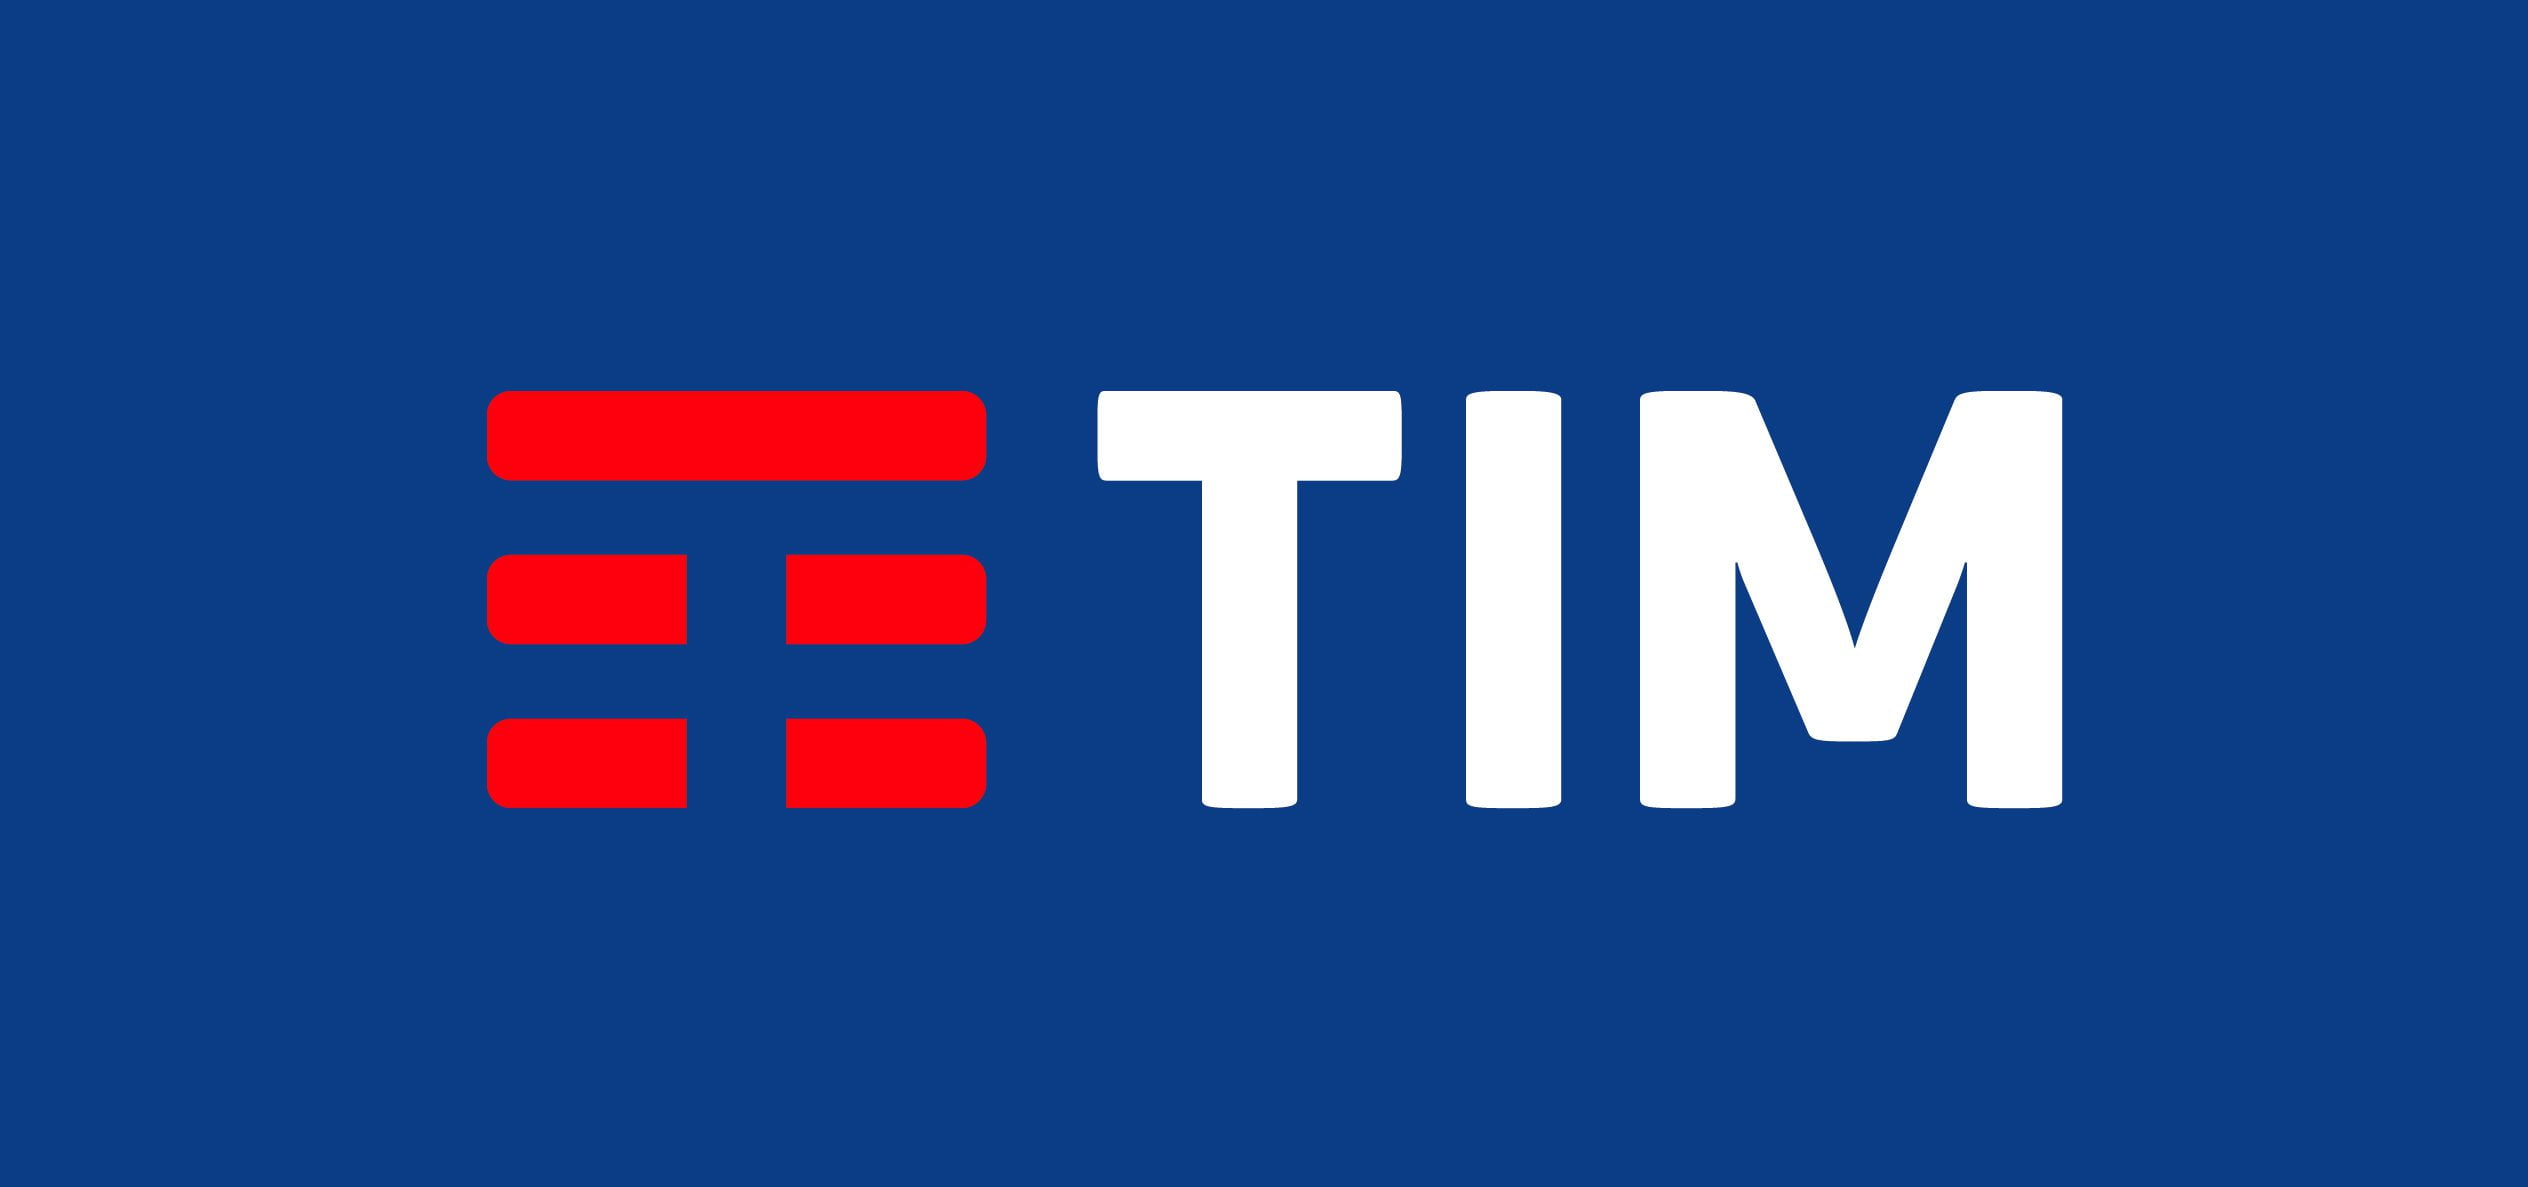 TIM lança plano Black para empresas - Mobile Time